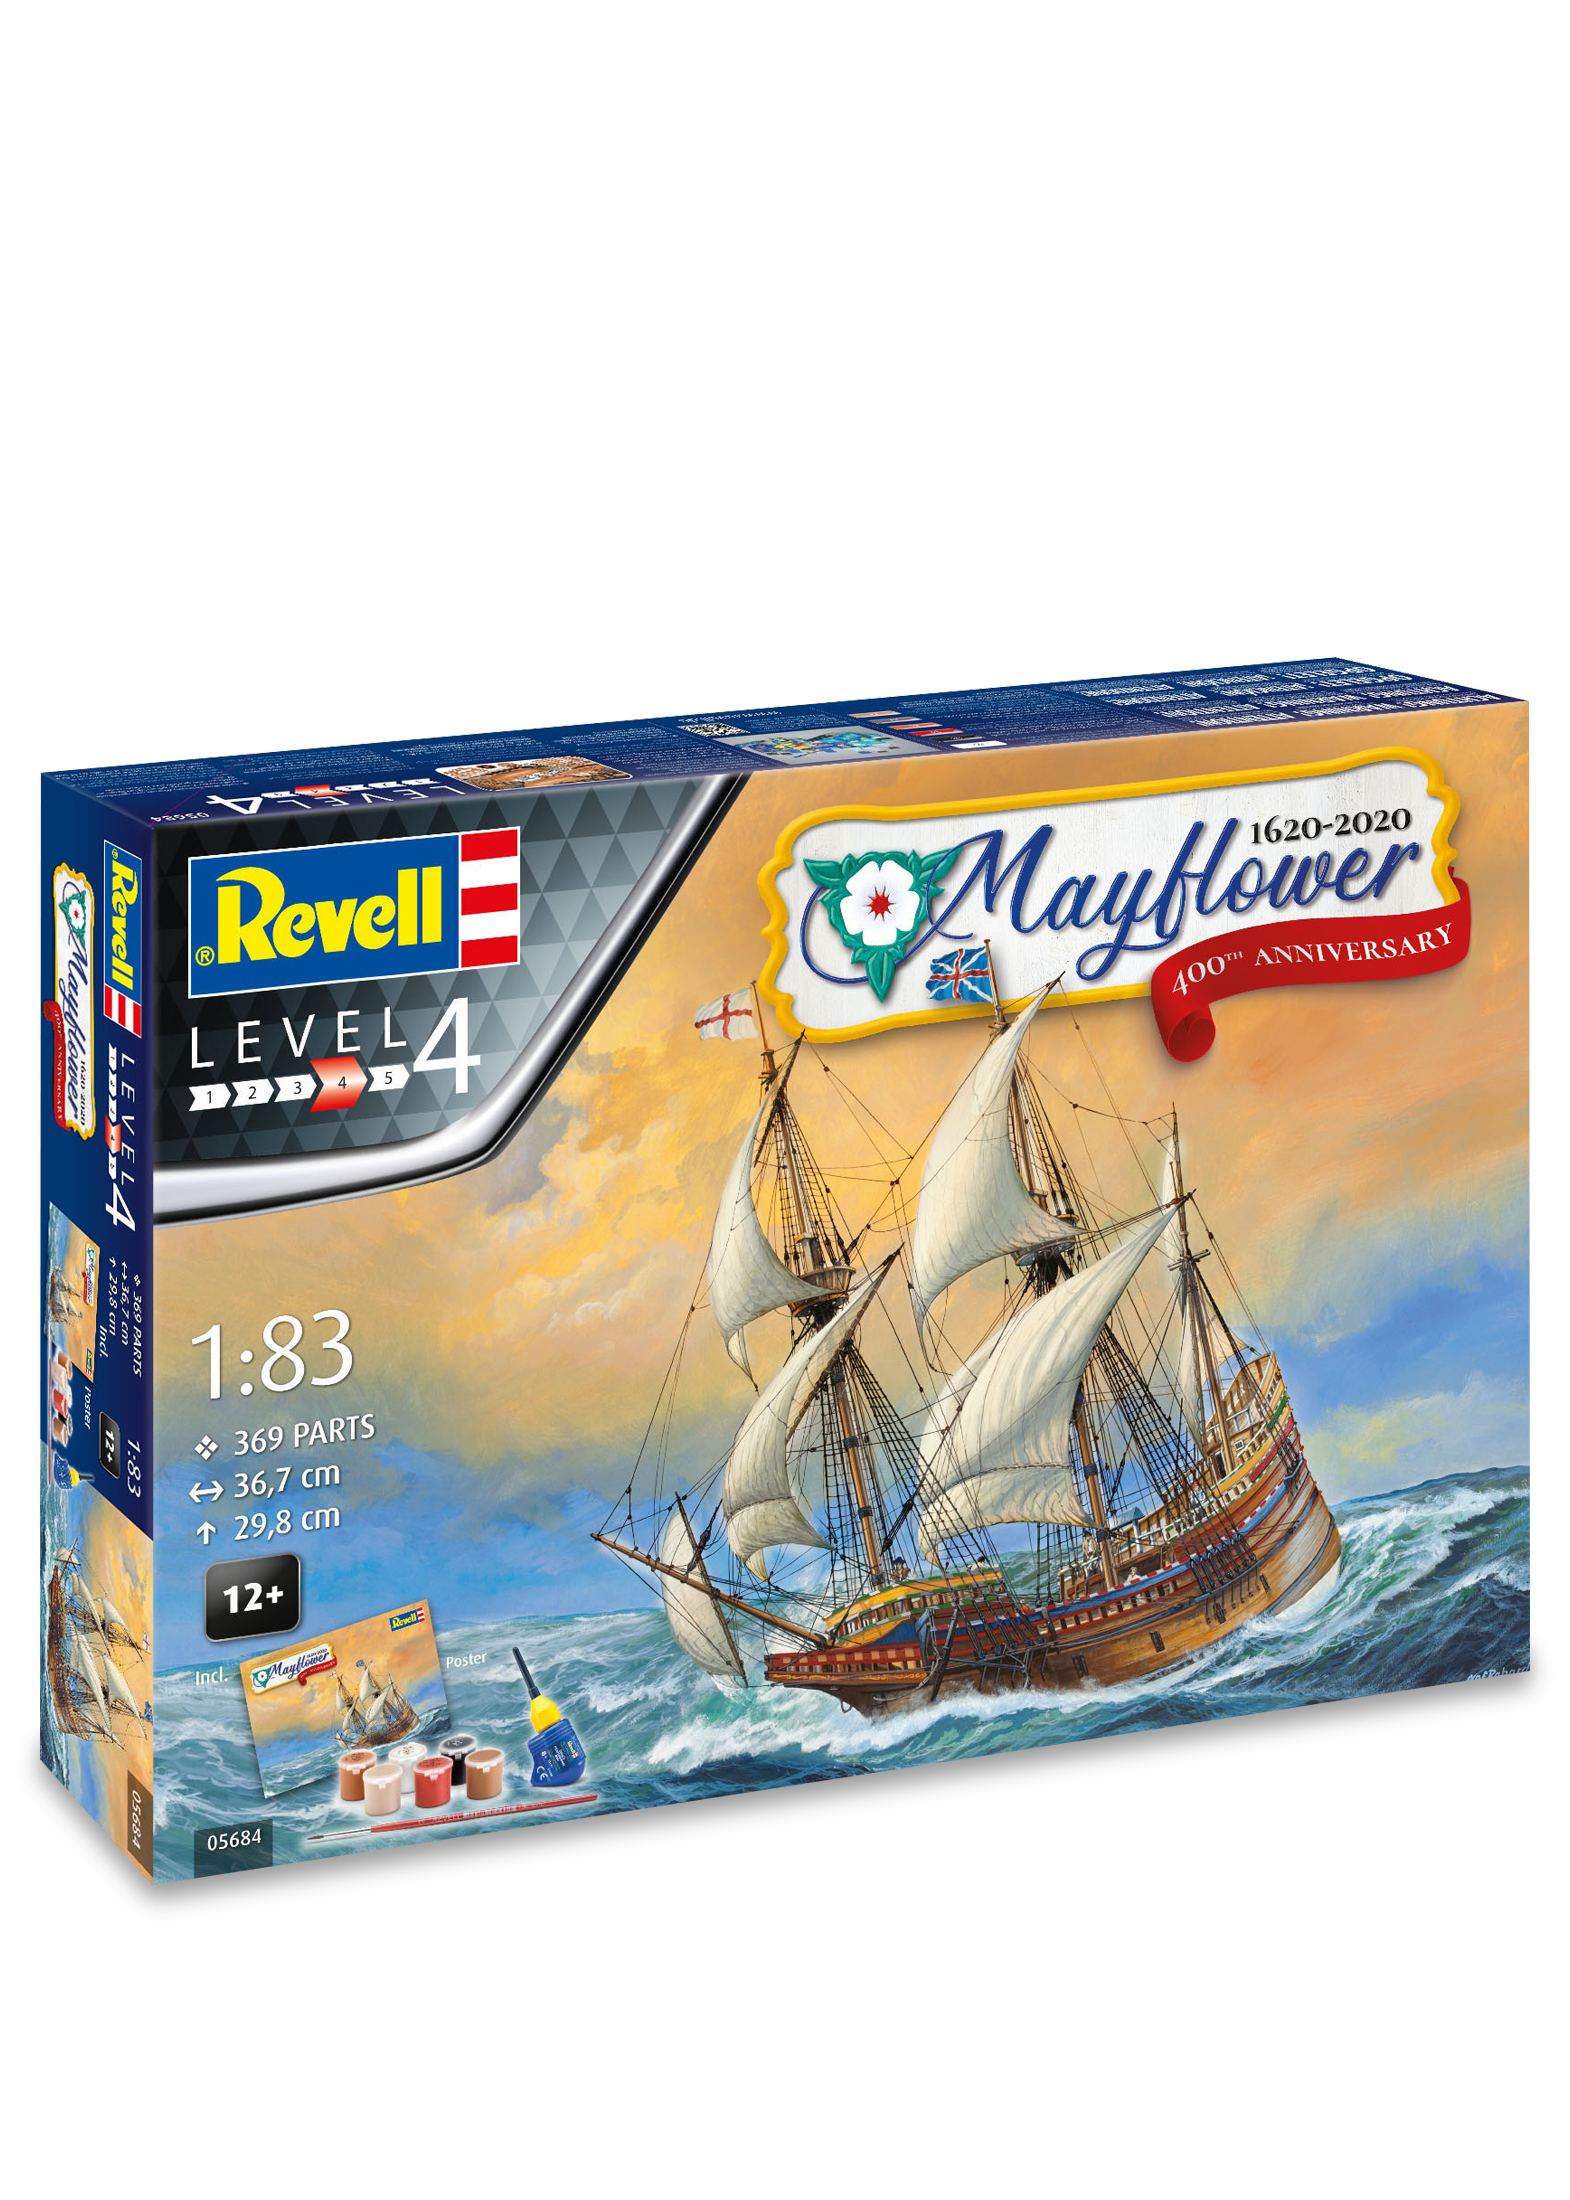 Mayflower - 400th Anniversary image number 0